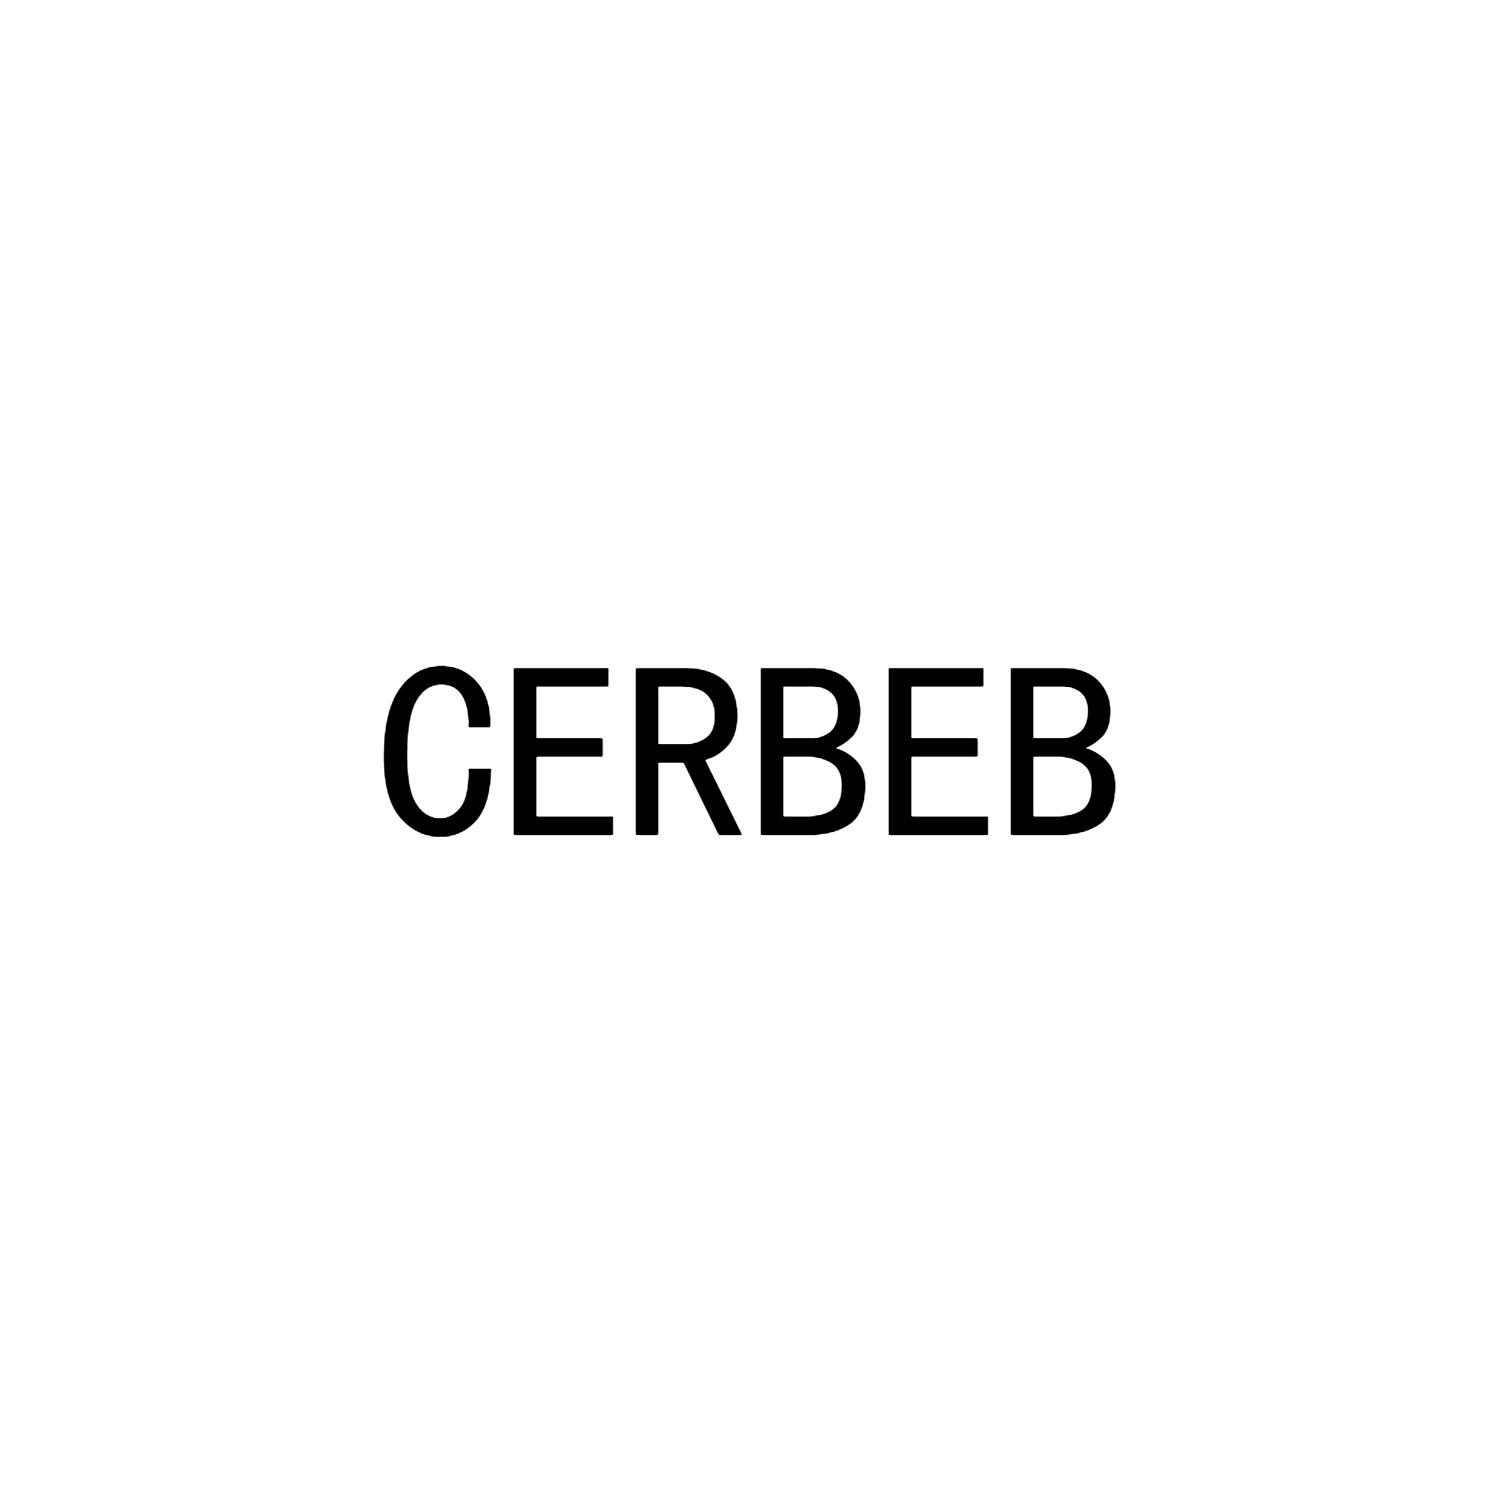 30类-面点饮品CERBEB商标转让